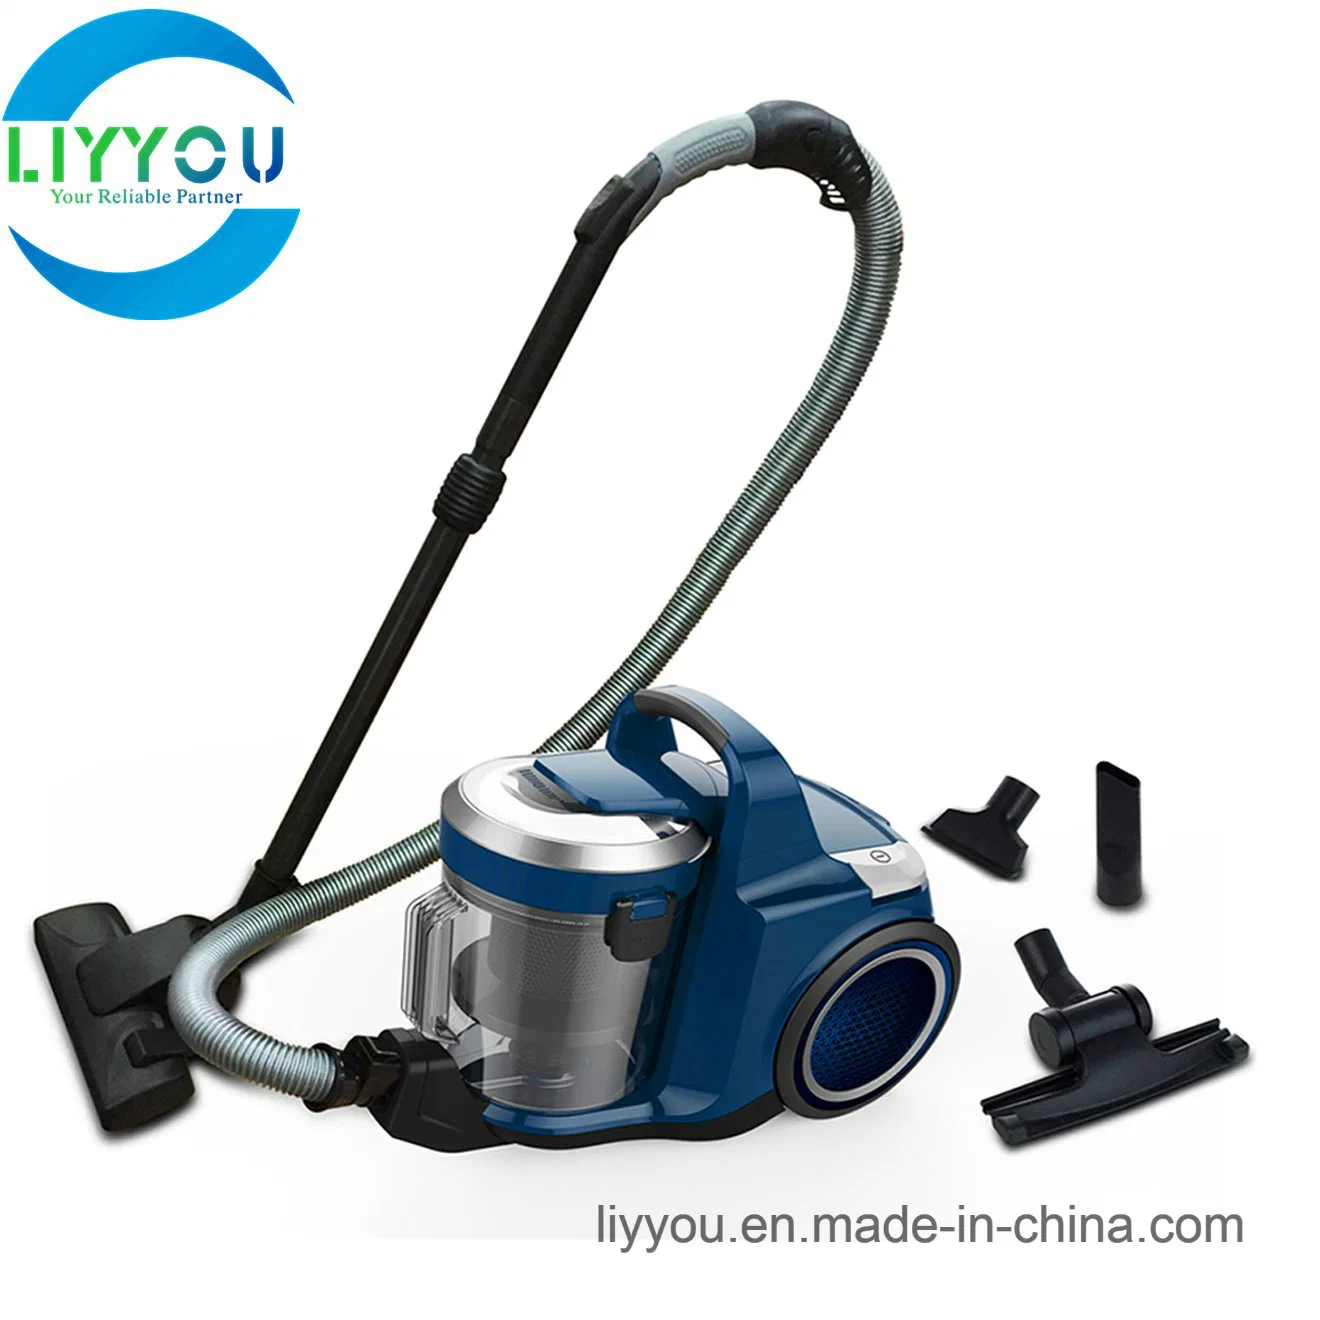 More Than 18 Kpa Air Pressure Handle Bagless Canister Multi-Cyclone Vacuum Cleaner